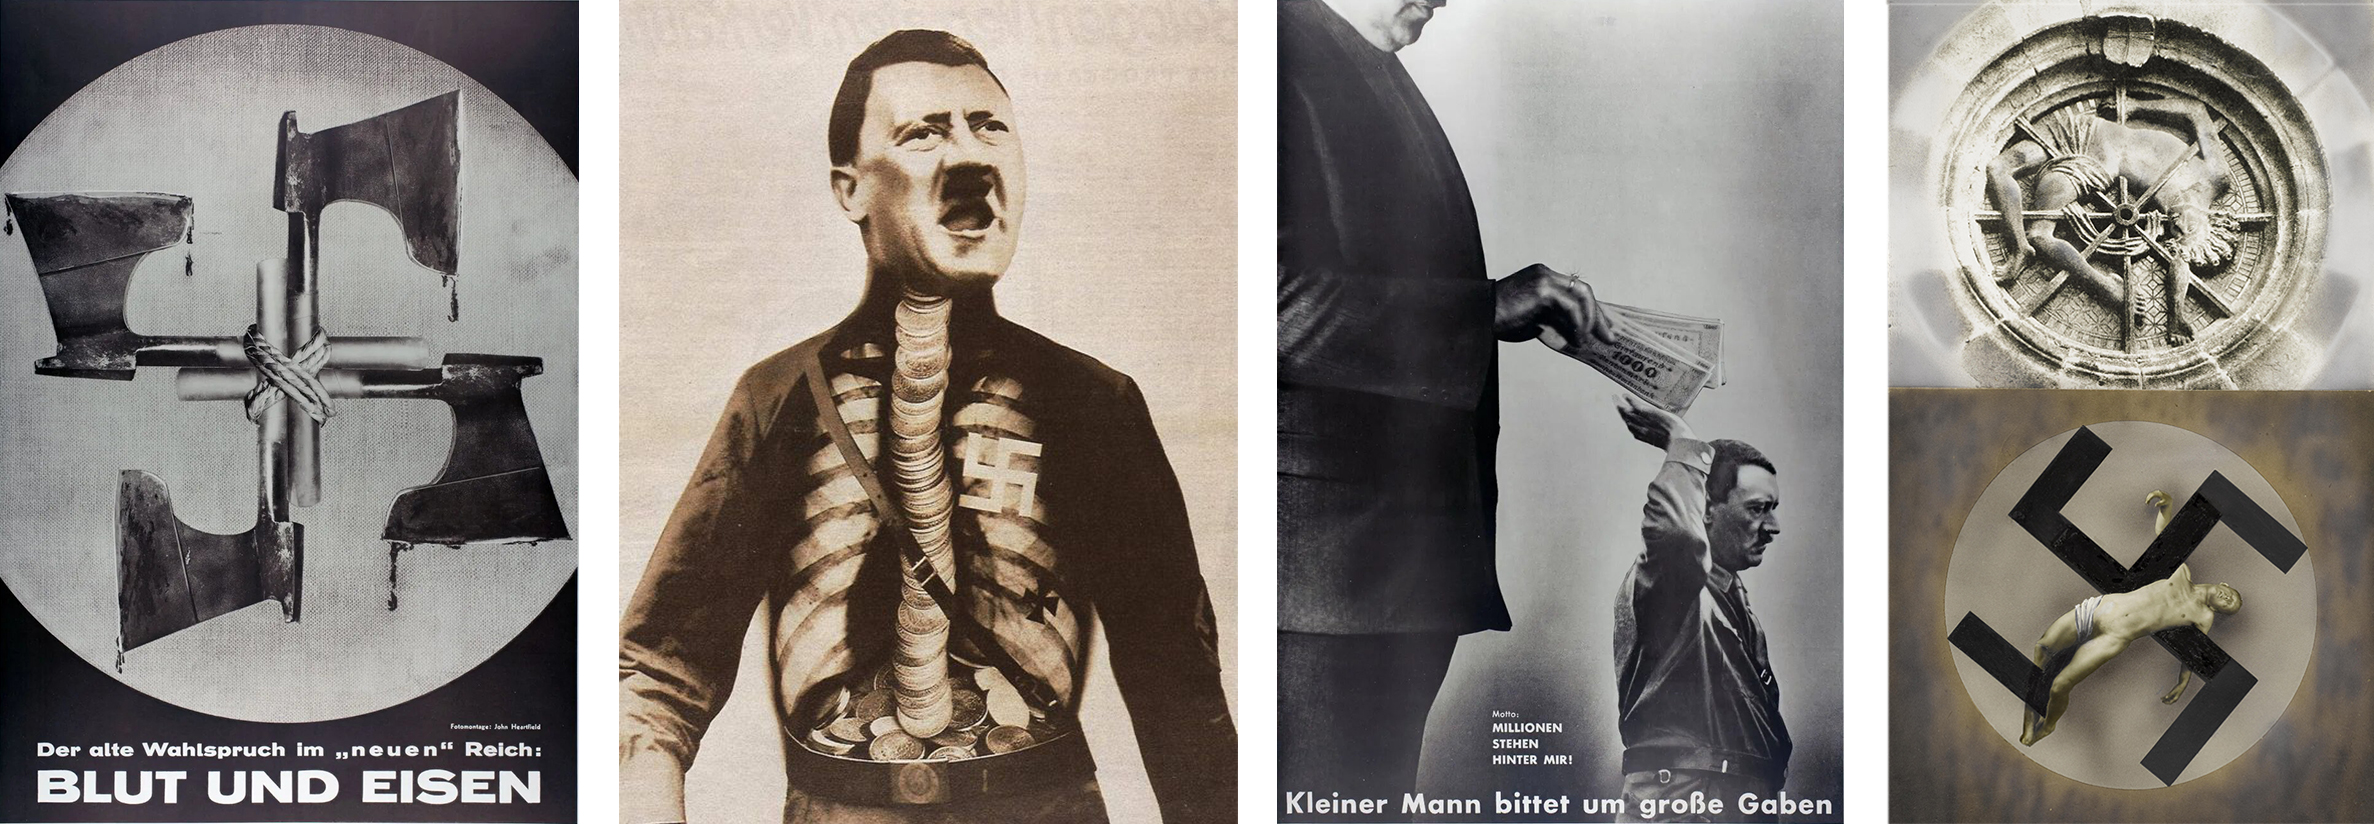 1930s-heartfield-photomontages-anti-nazi